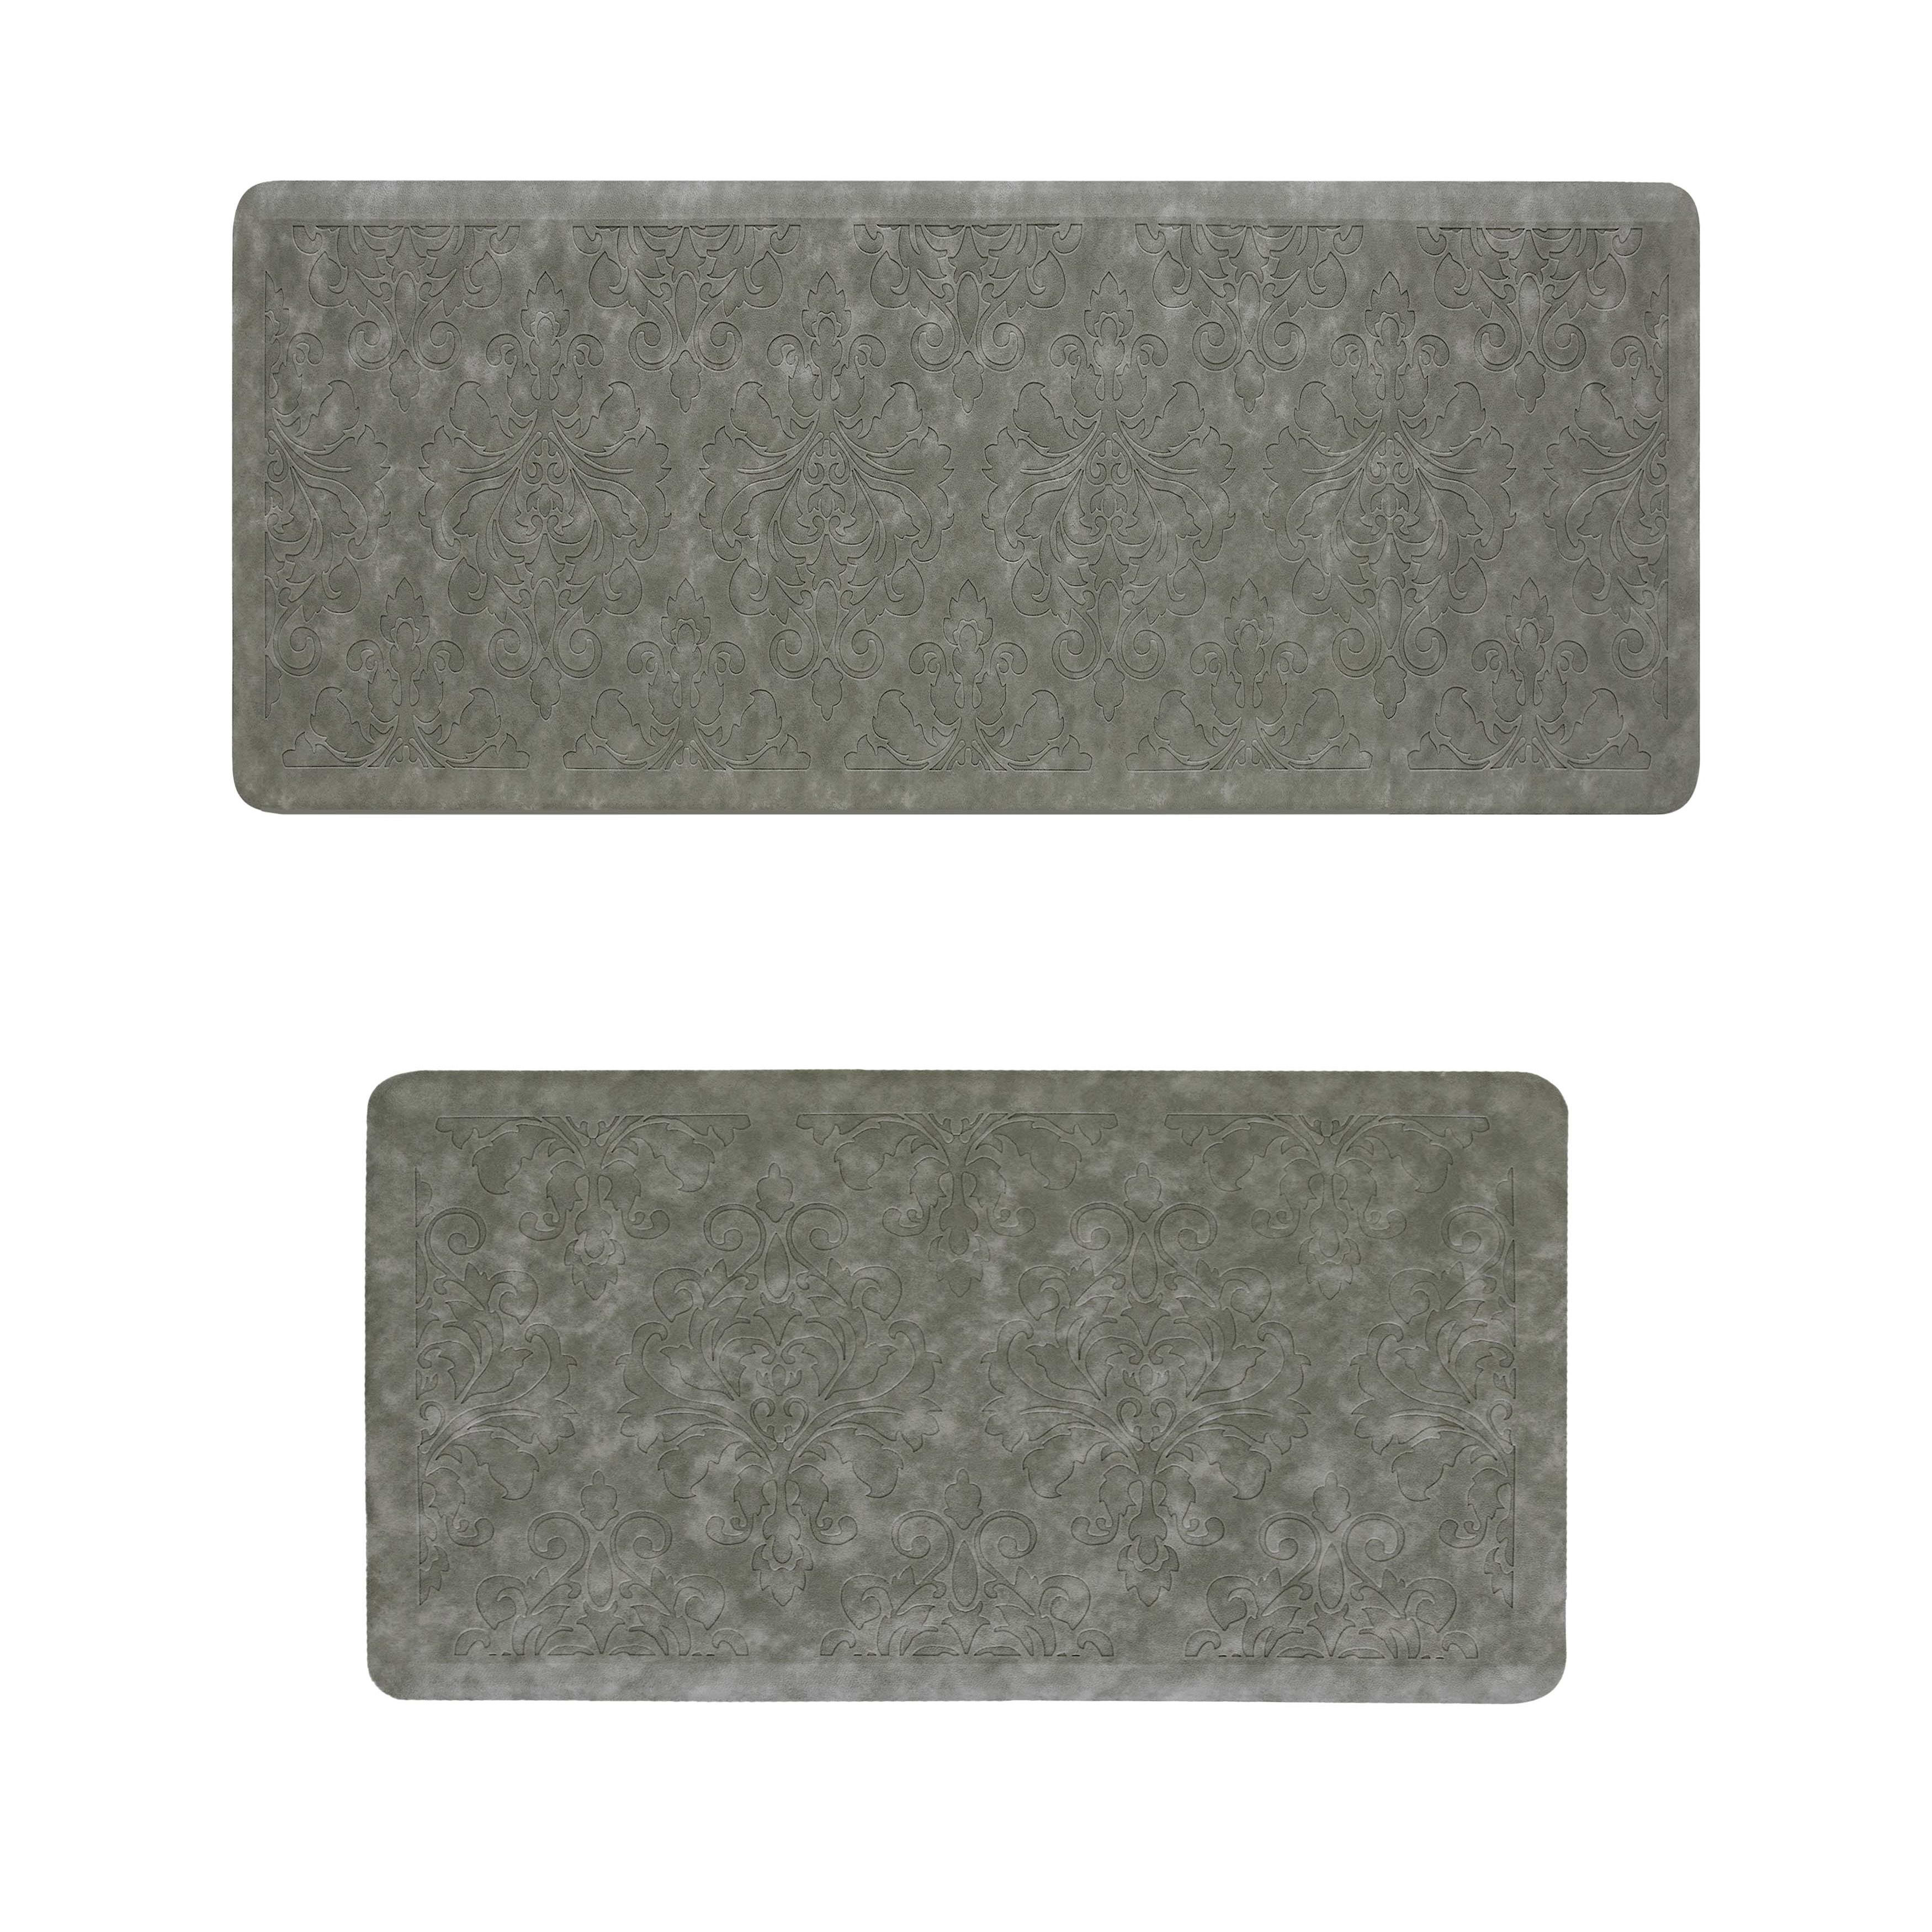 Kitchen Anti-Fatigue Mat Canora Grey Color: Light Gray